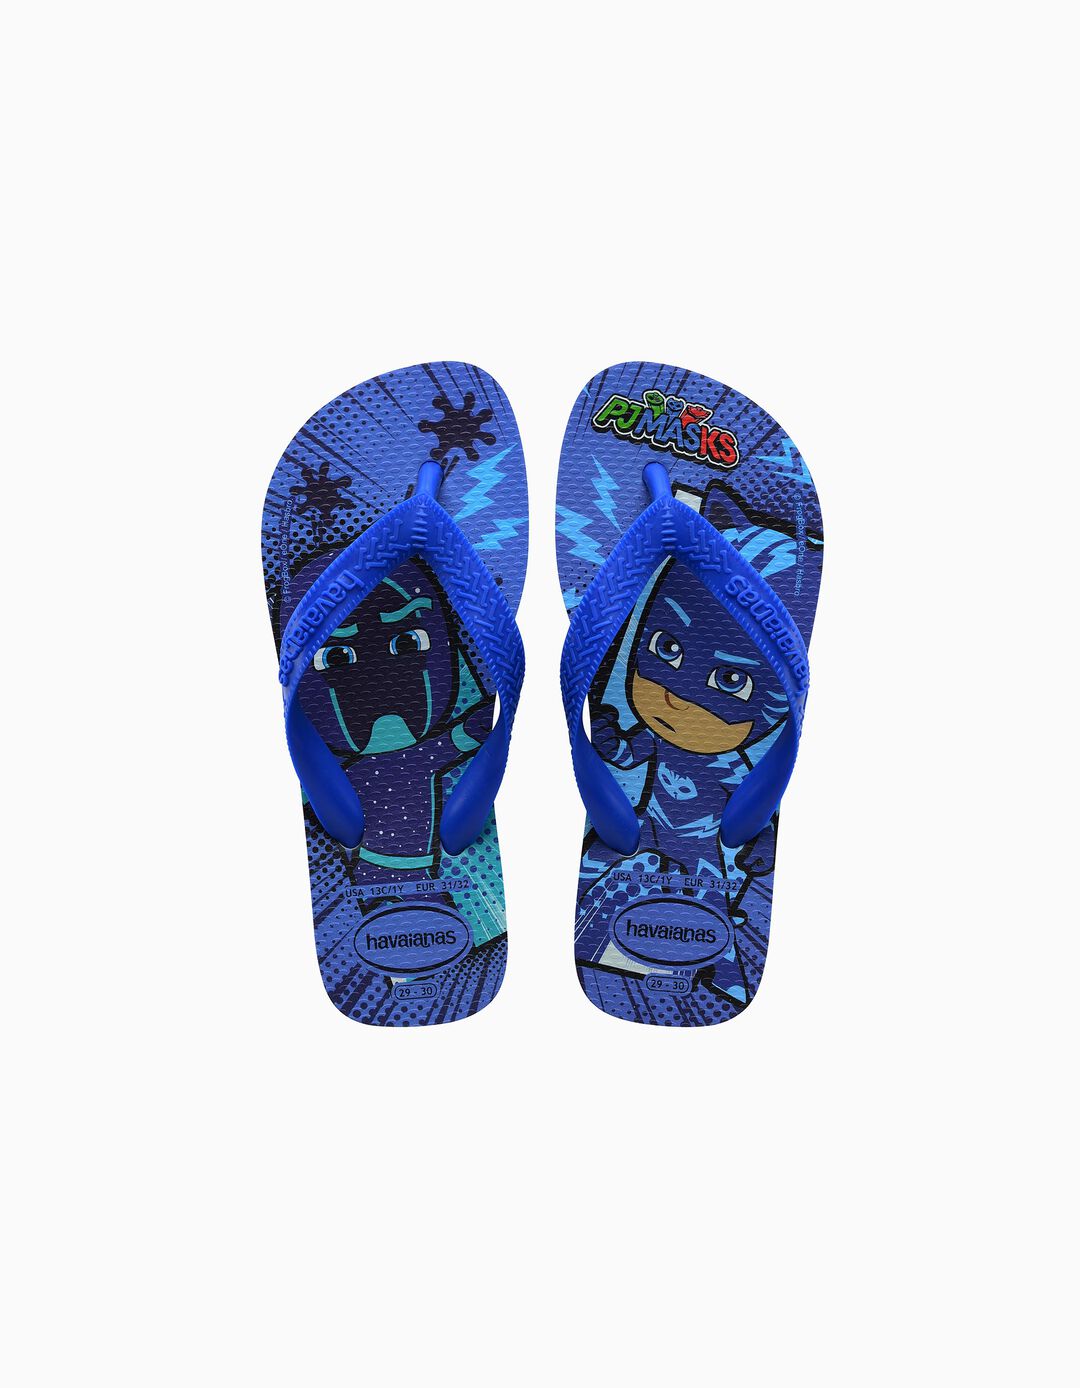 PJ Masks' 'Havaianas' Flip Flops, Boys, Blue